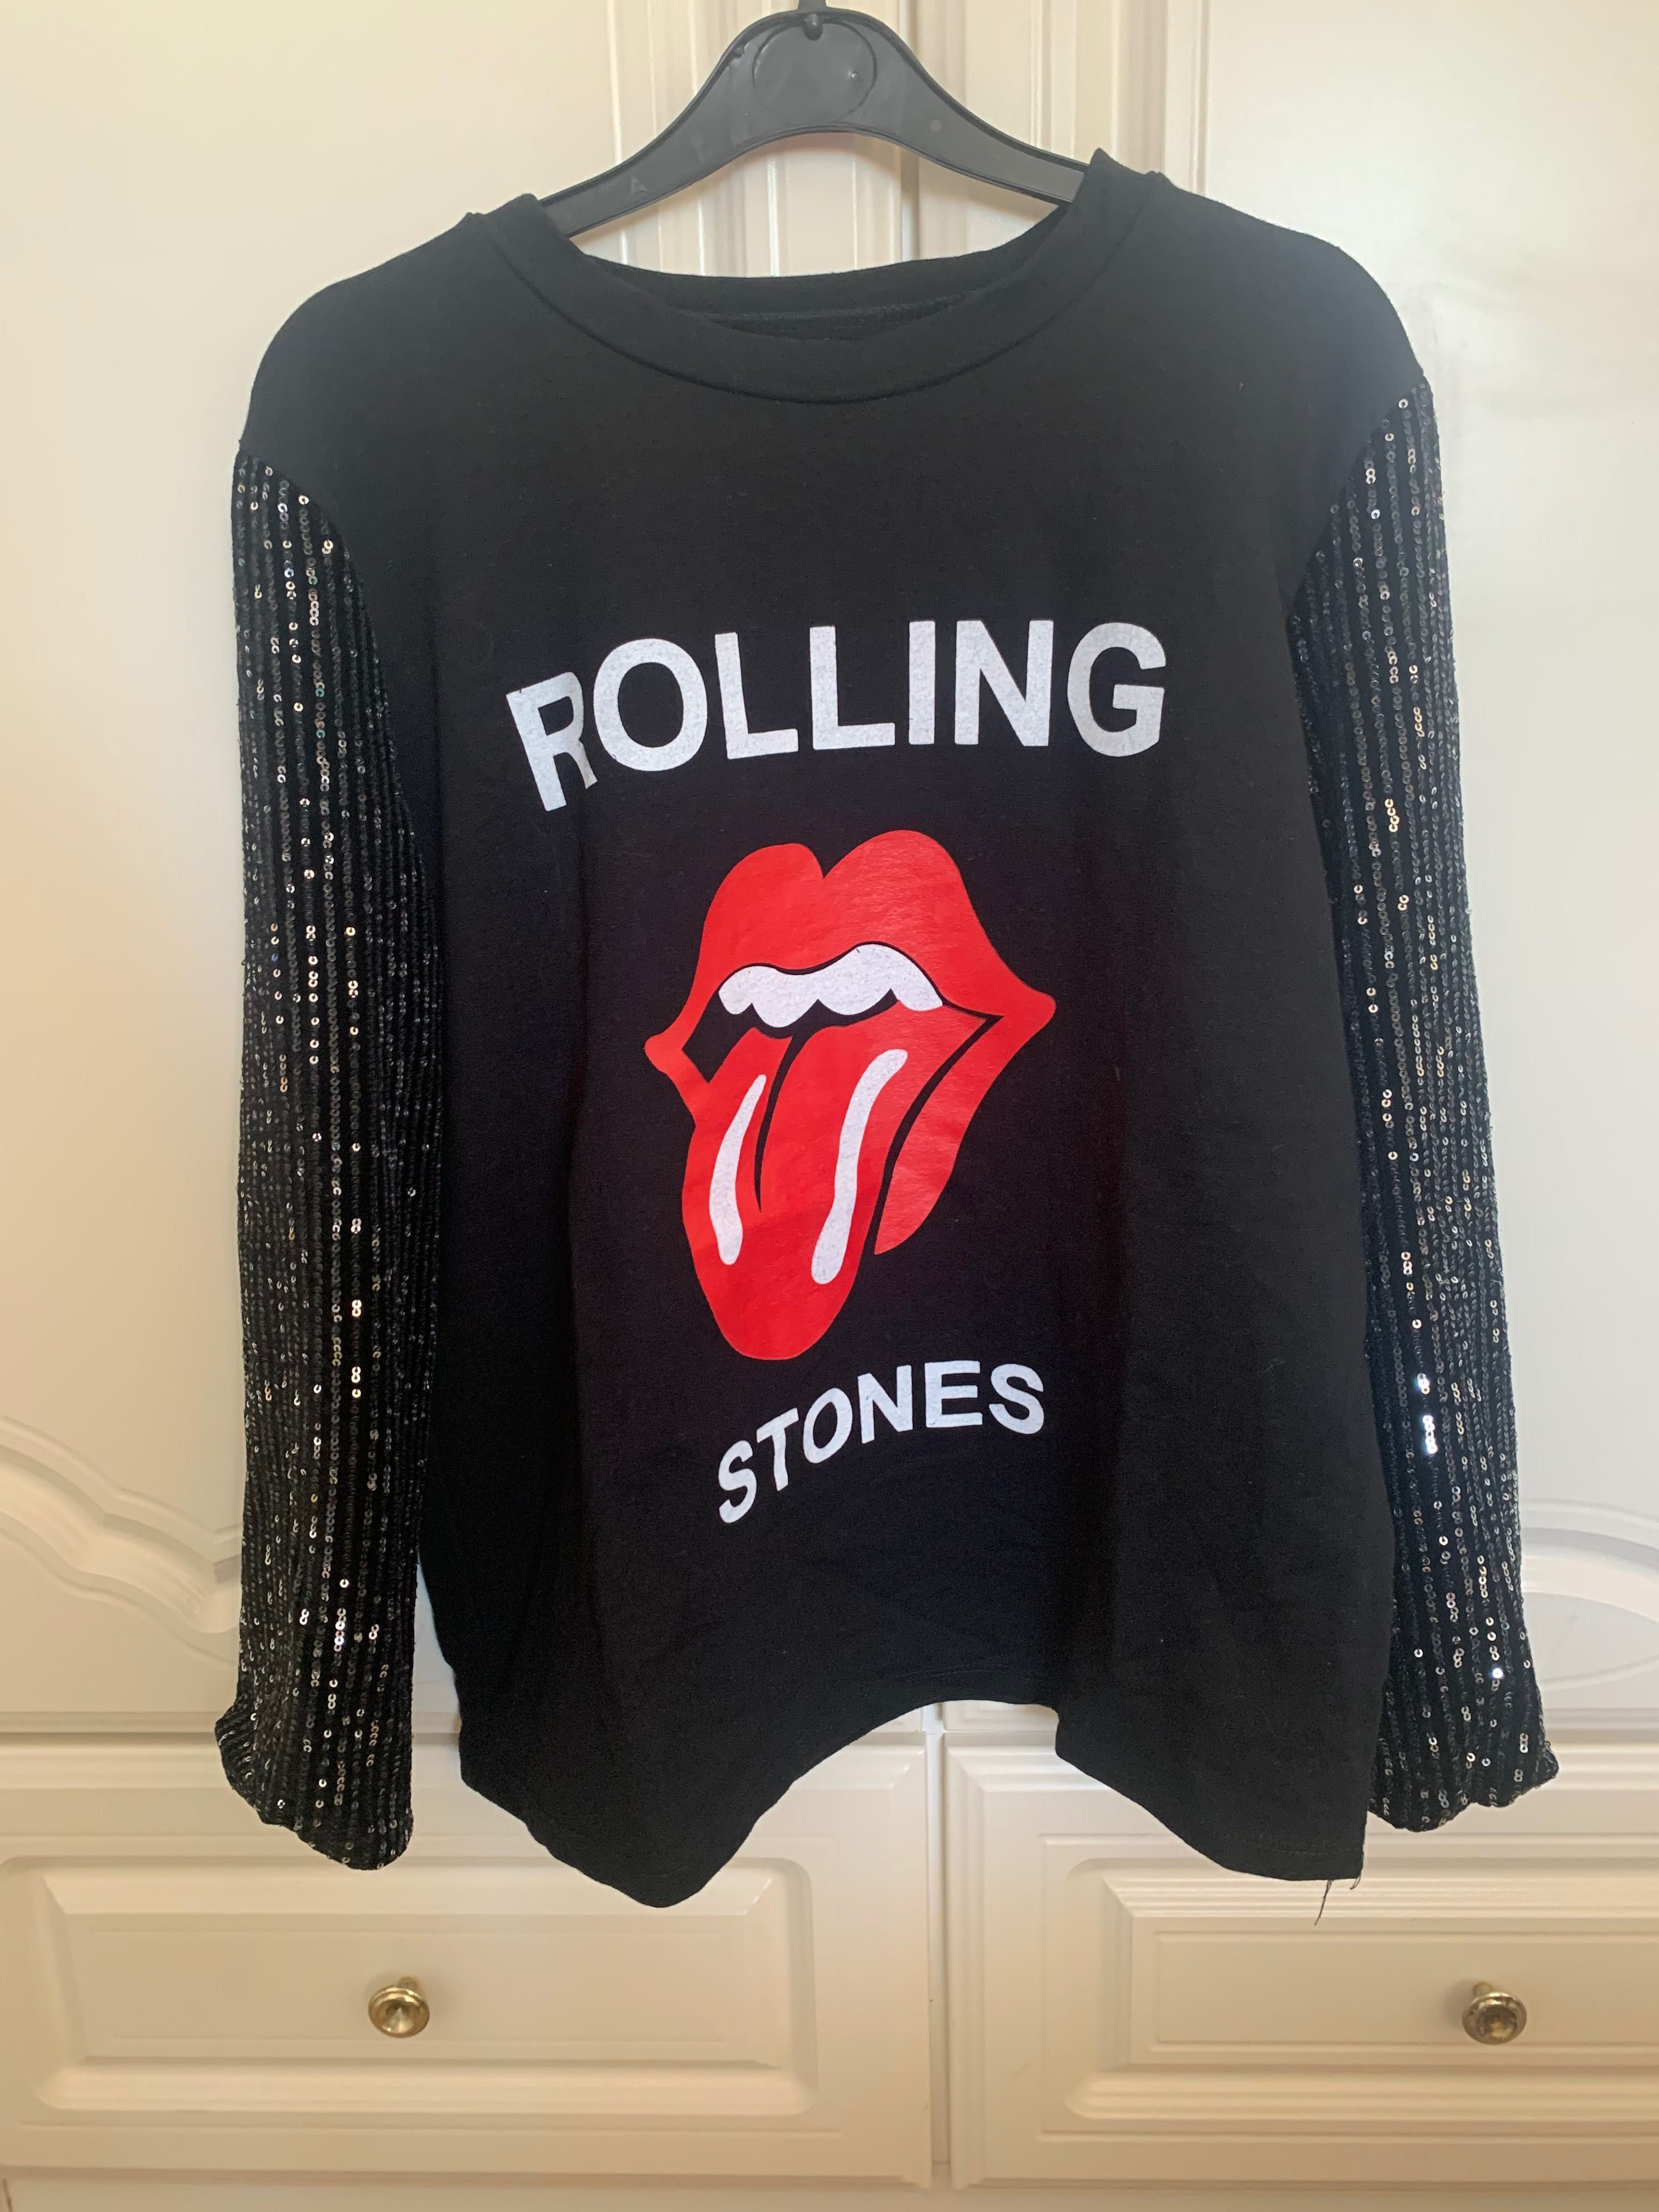 Camisola dos Rolling Stones